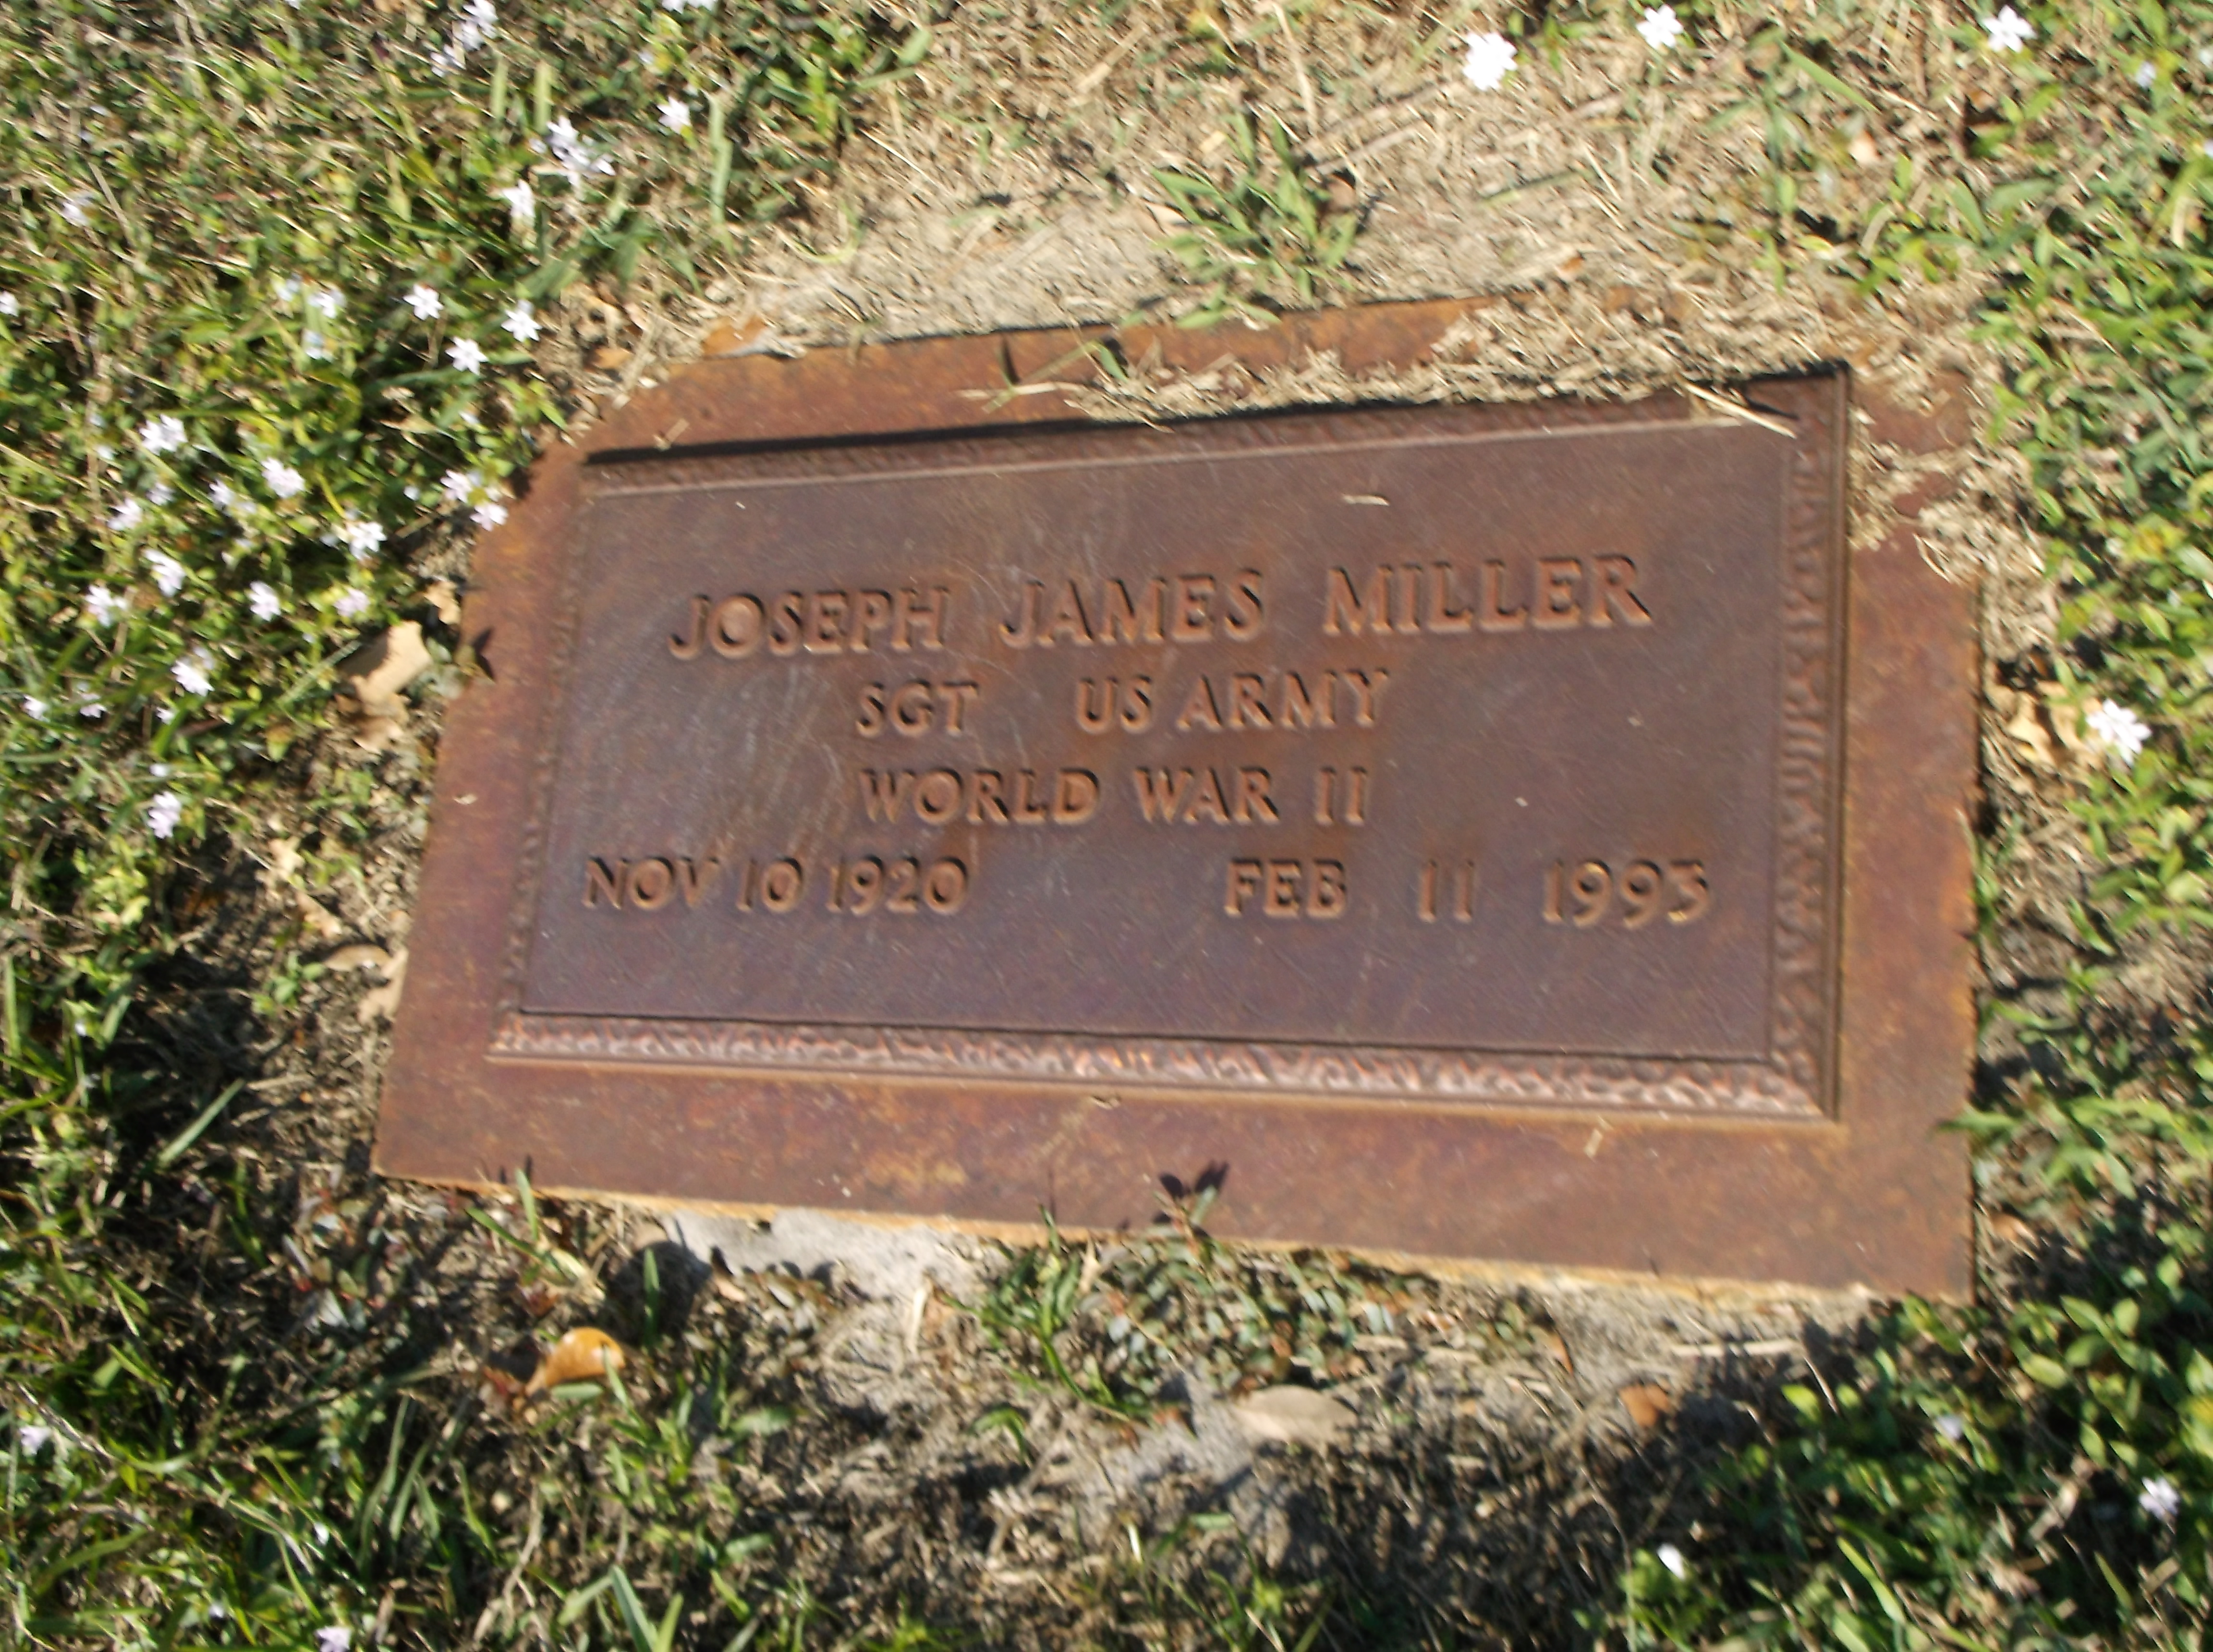 Joseph James Miller